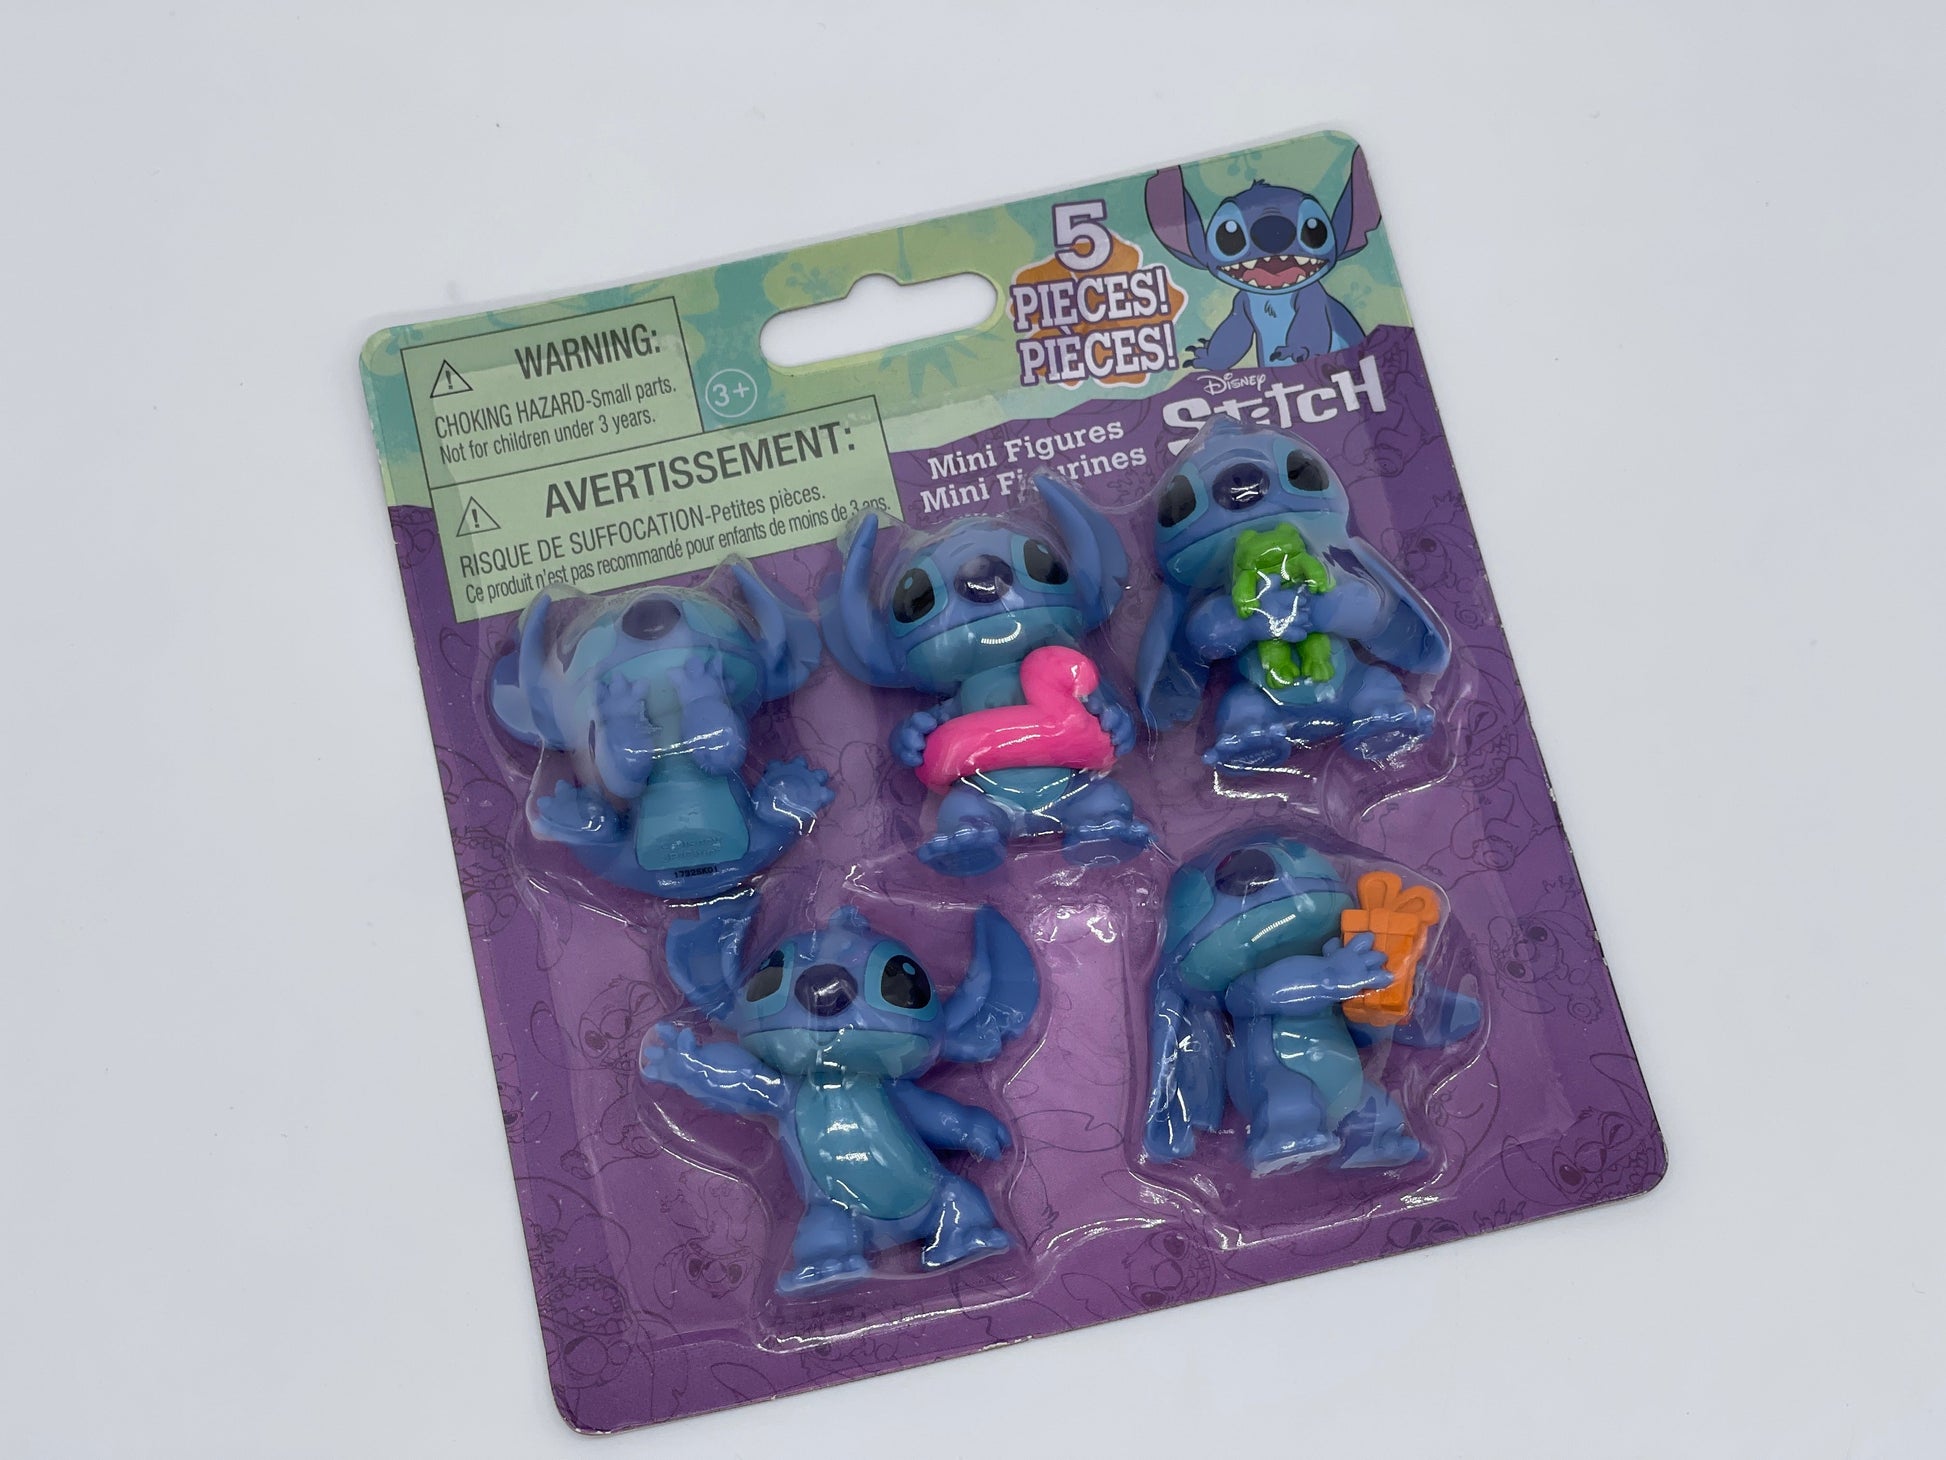 Disneys Lilo & Stitch Collectible Stitch Figure Set, 5-pieces, by